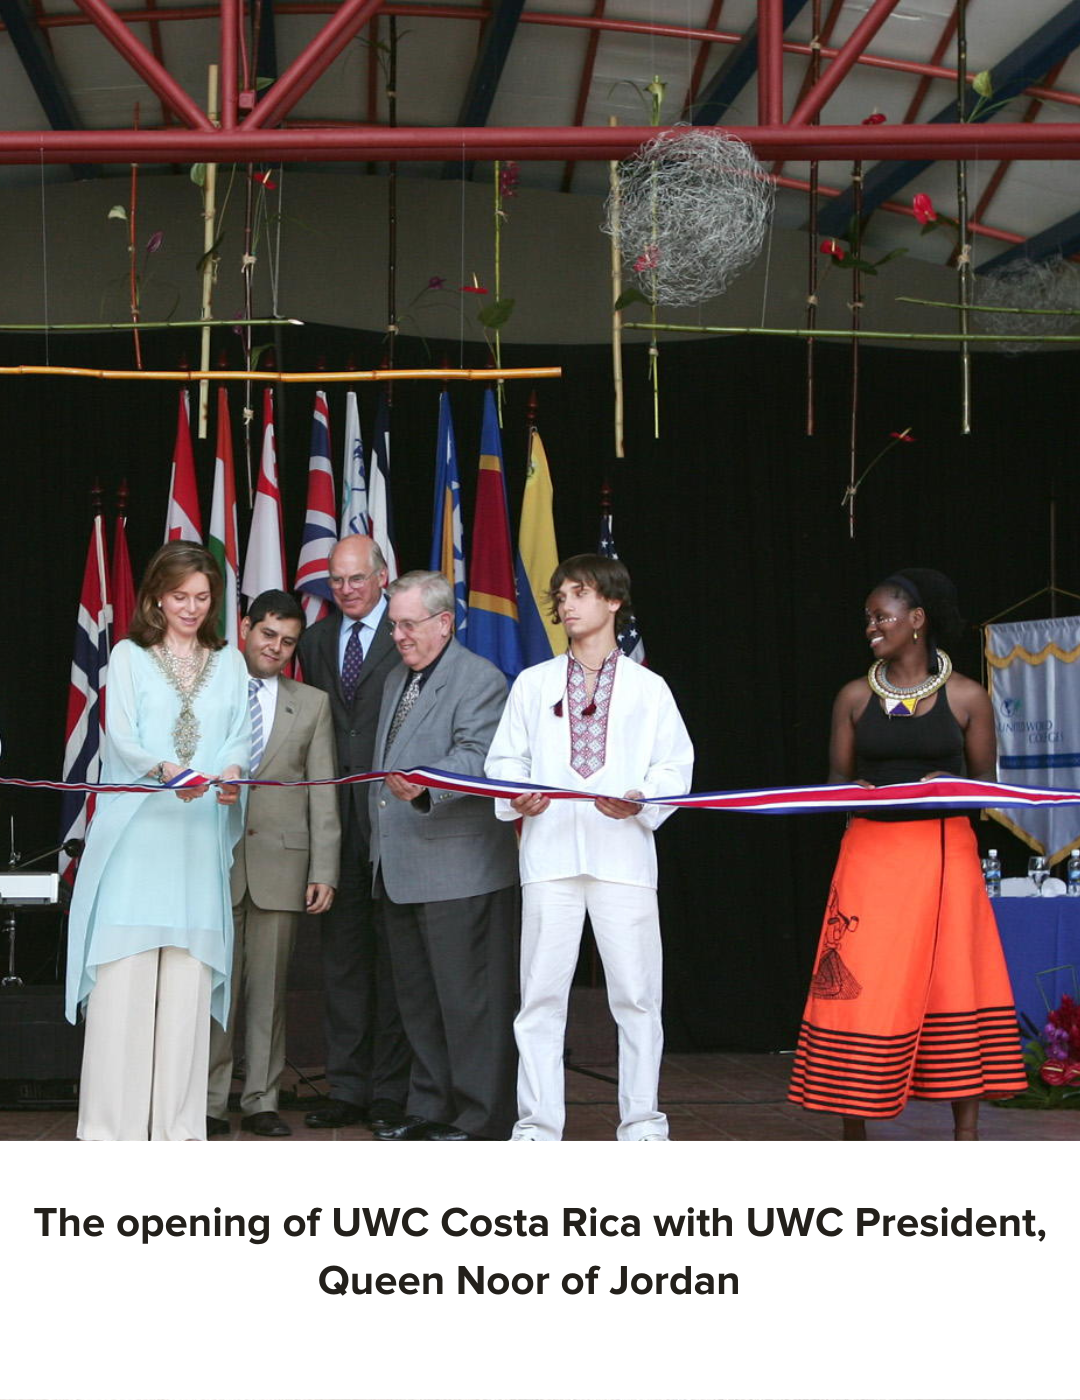 The opening of UWC Costa Rica